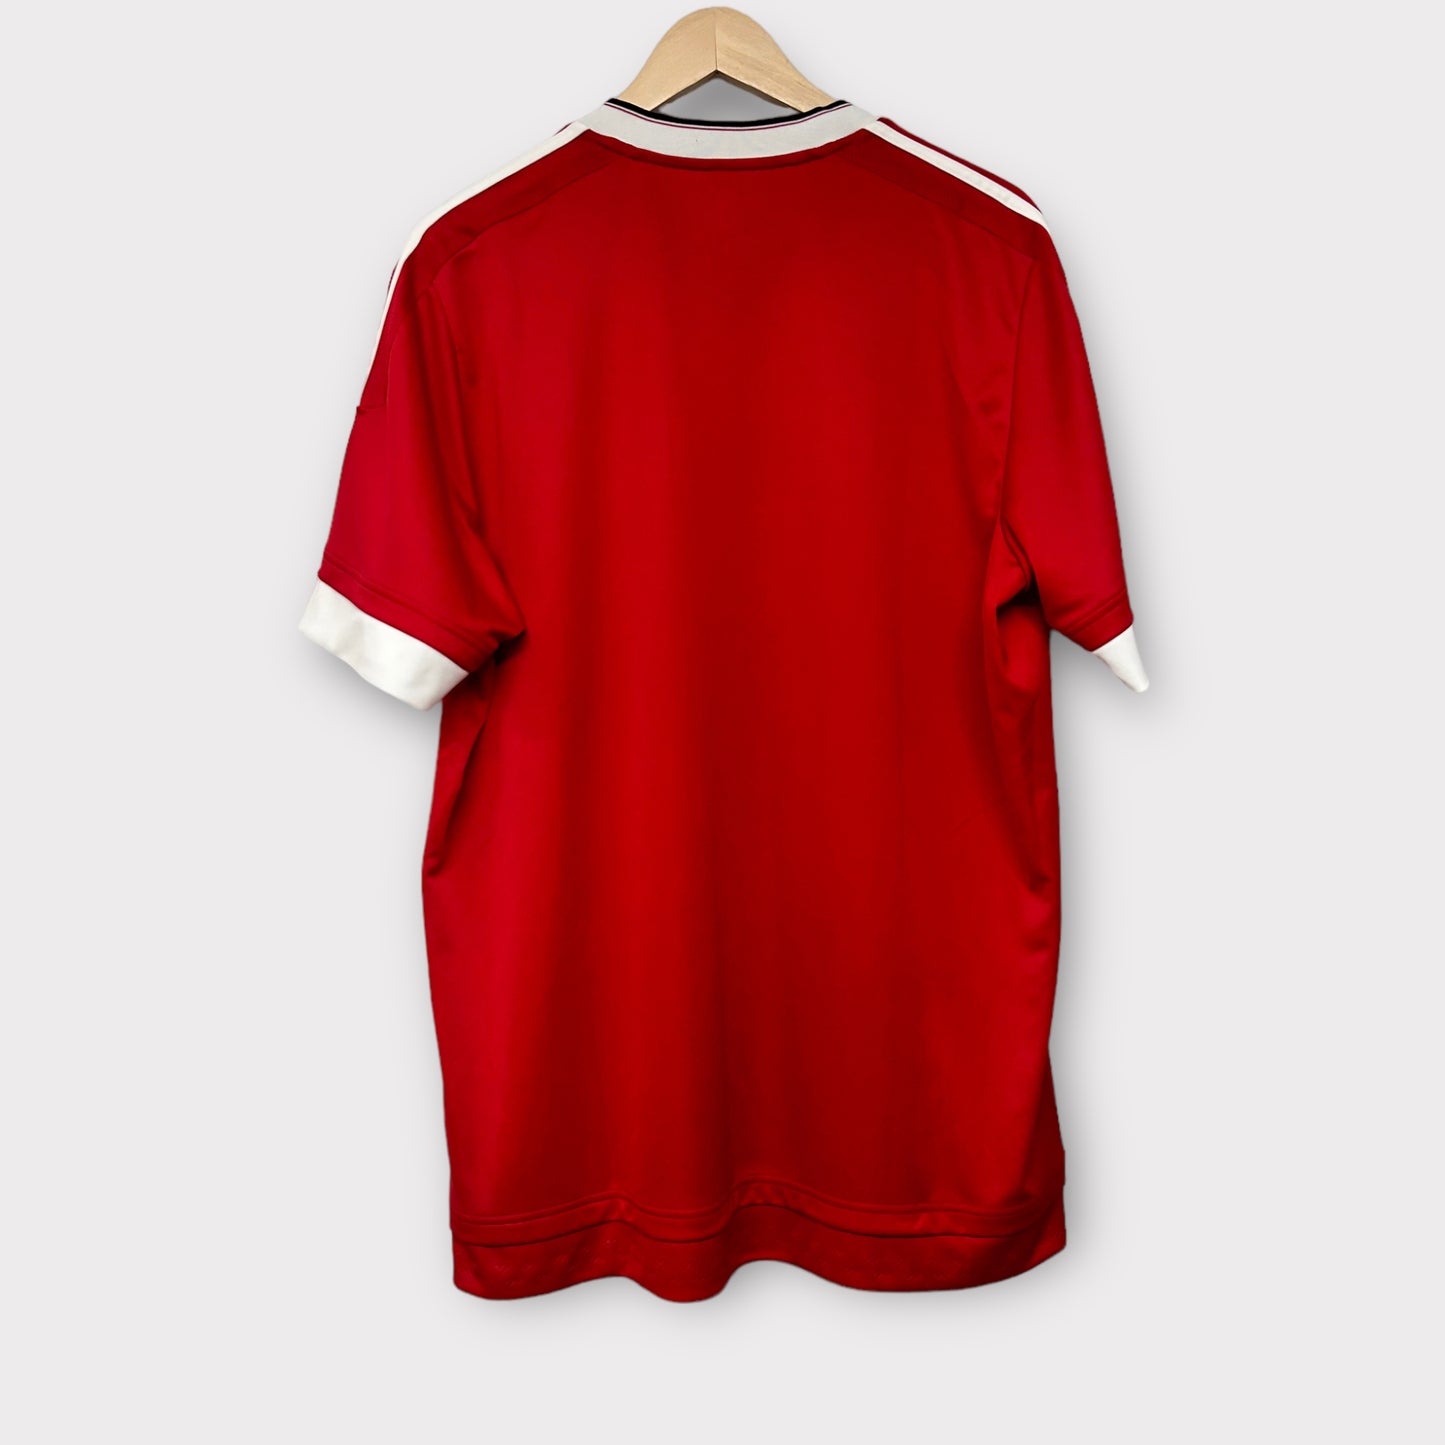 Manchester United 2015/16 Home Shirt (XL)